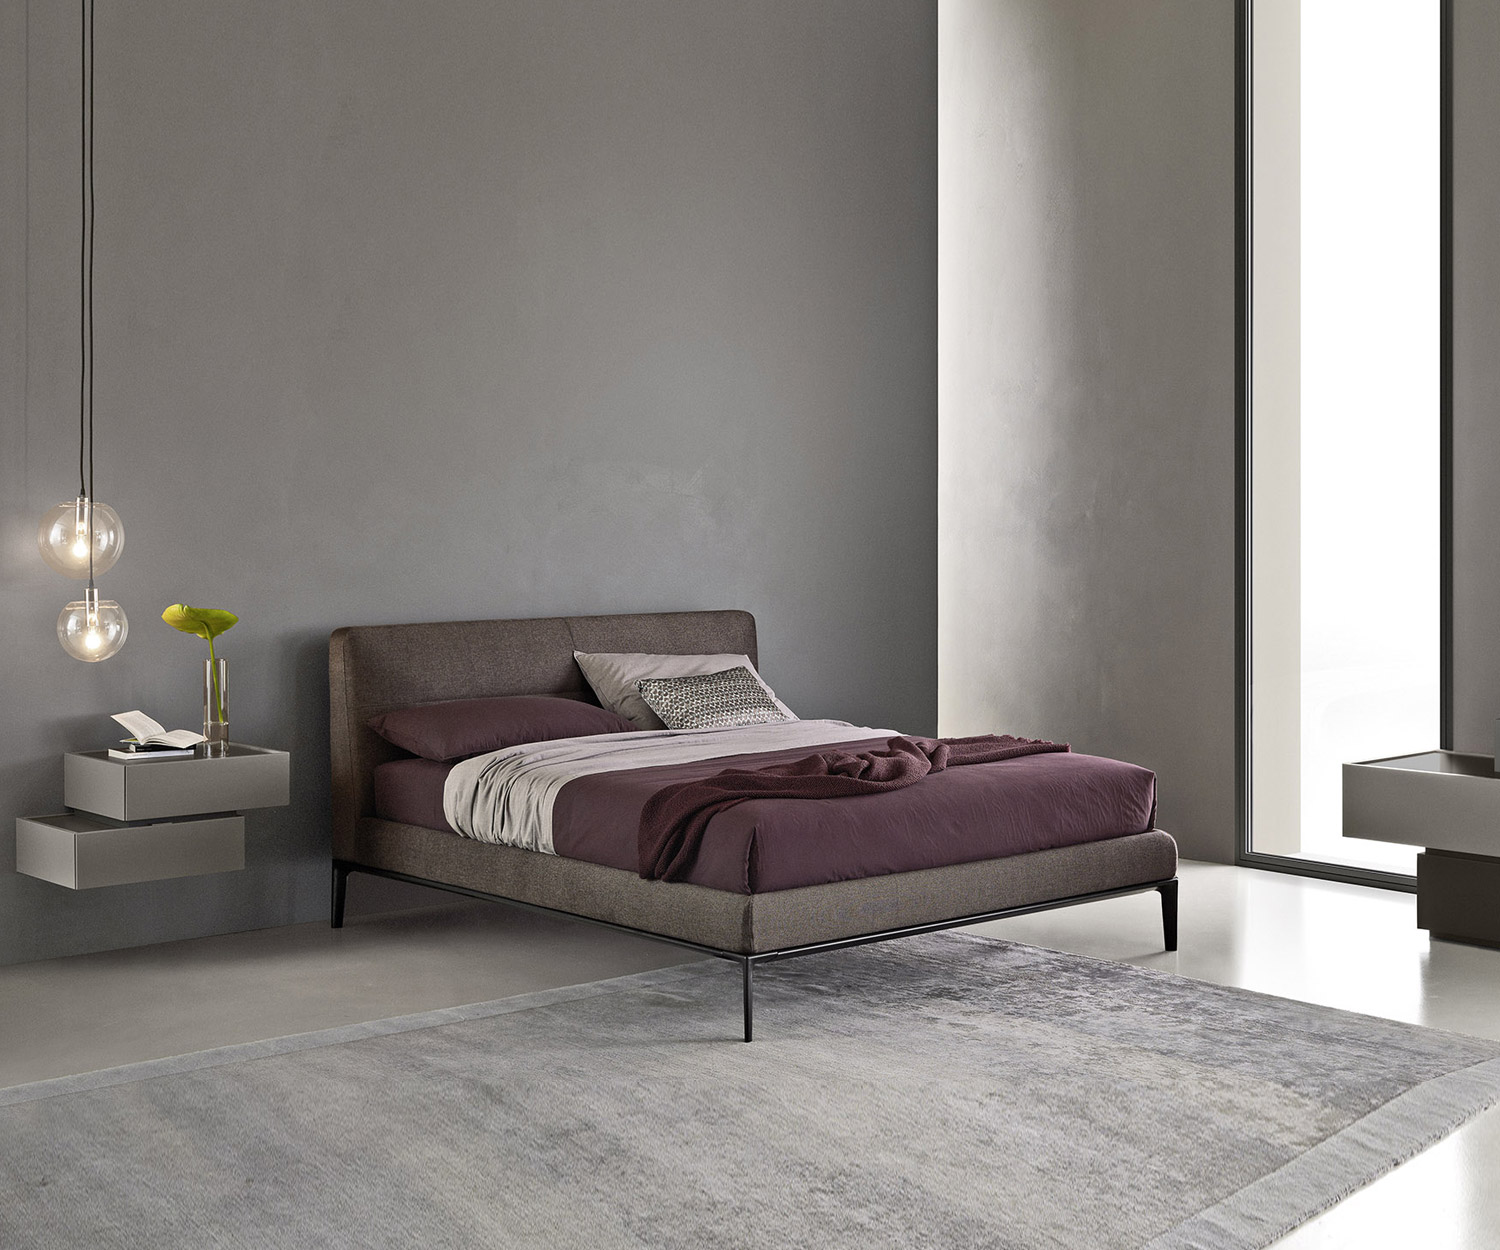 Comfortable Livitalia Design Dorian bed on narrow legs